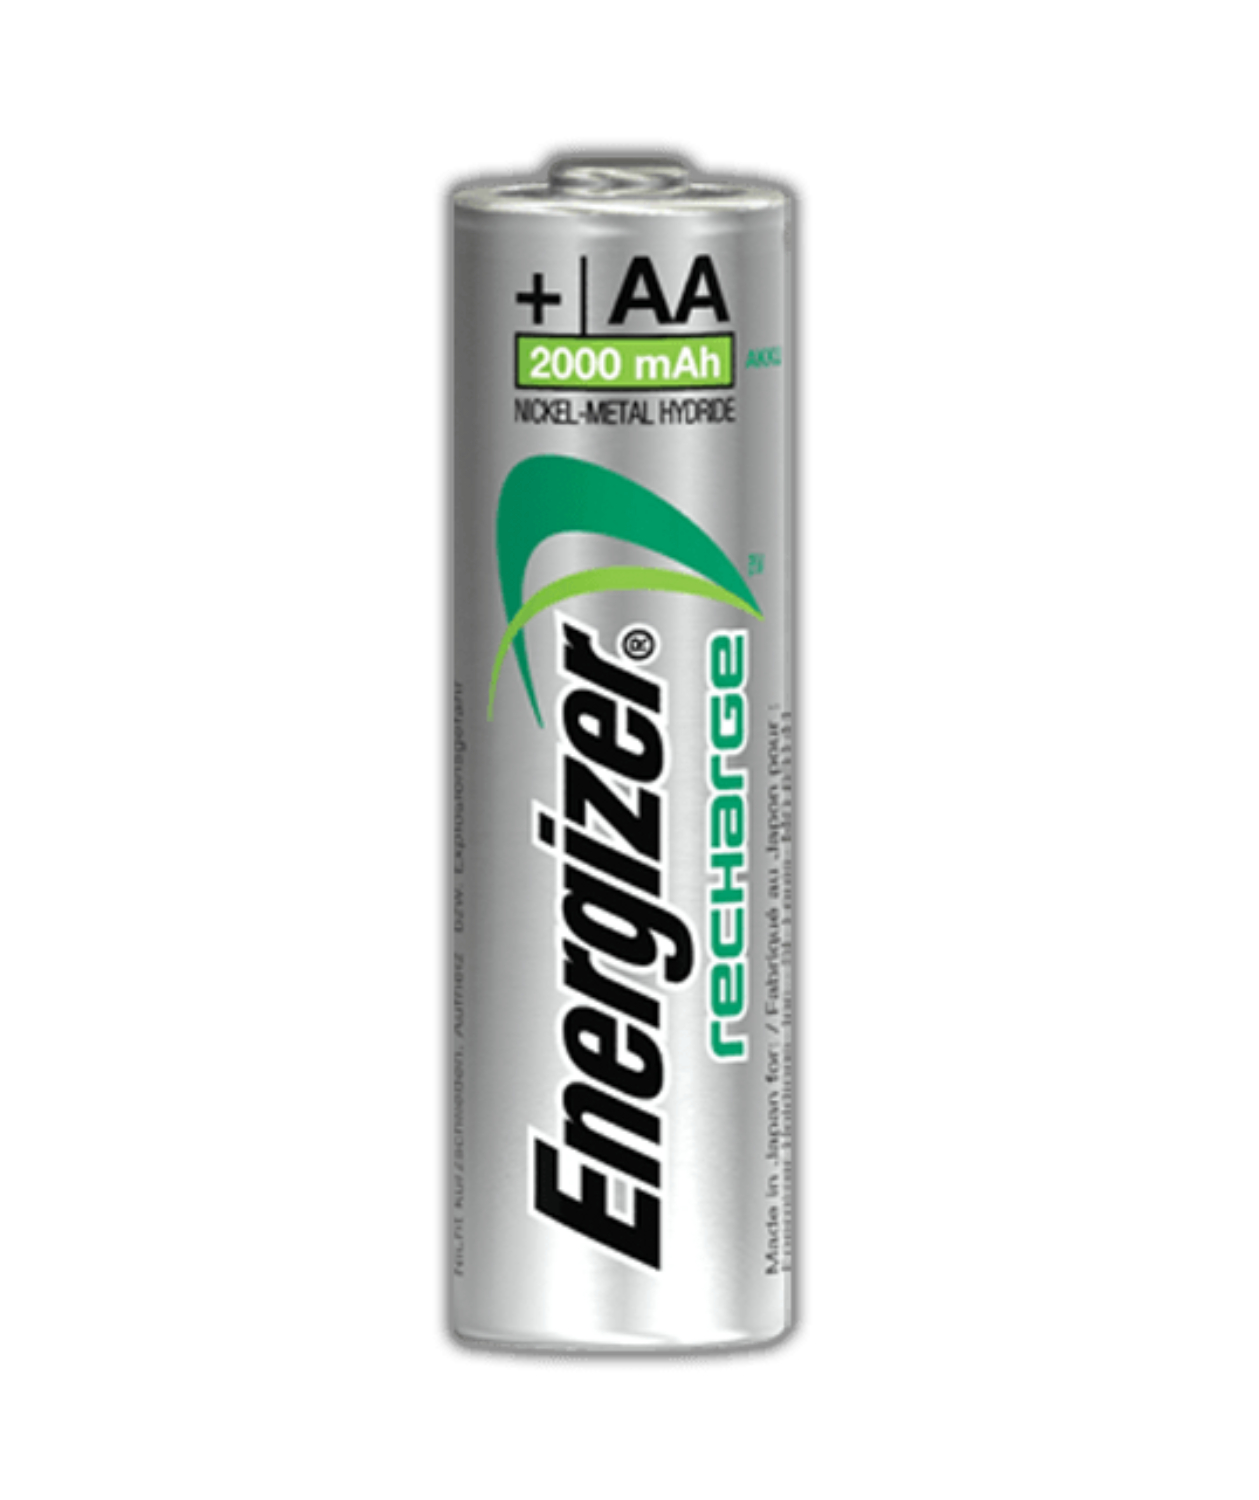 Energizer AA Power Plus 2000 mAh Rechargeable batteries 1.2V NiMh